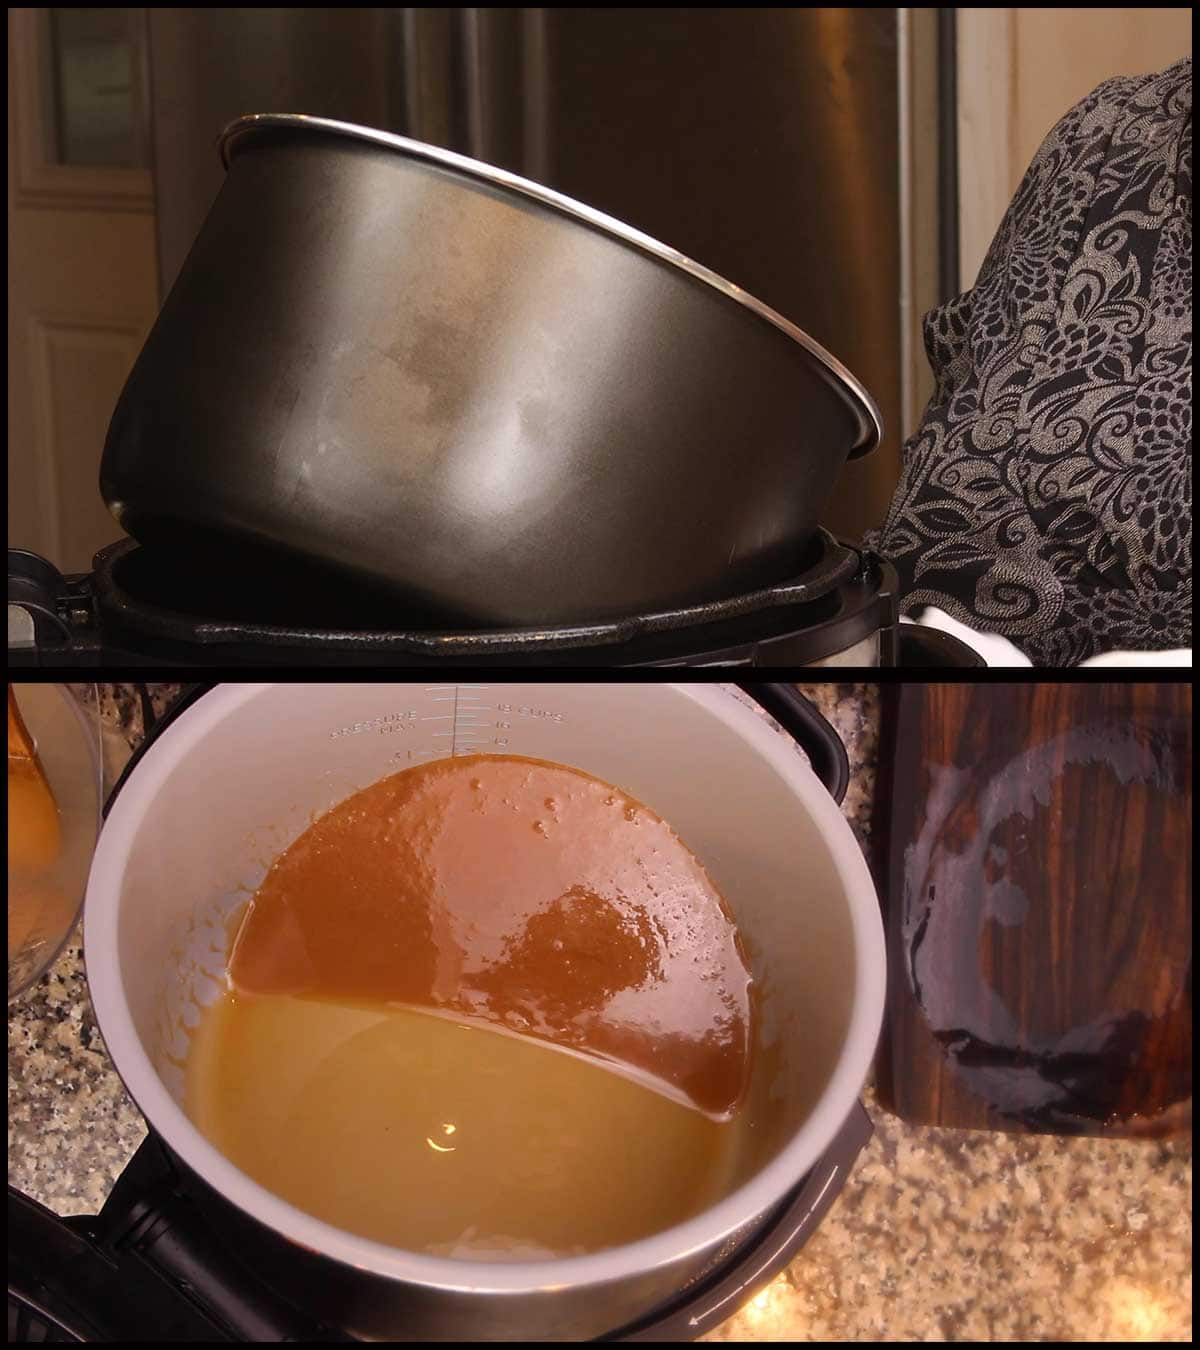 tilting inner pot in the Ninja Foodi to dip homemade caramel apples